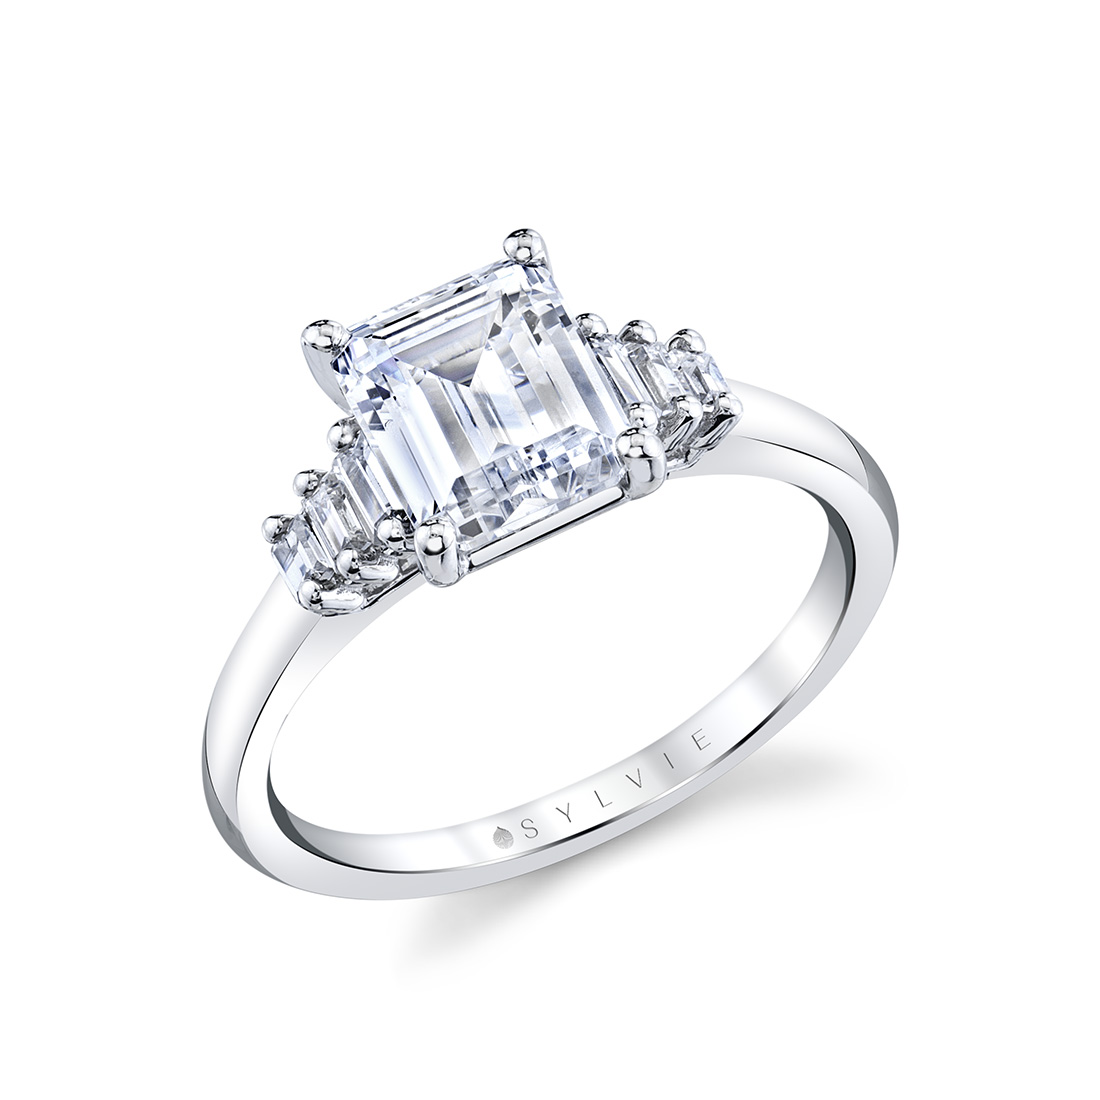 3 carat diamond engagement rings 